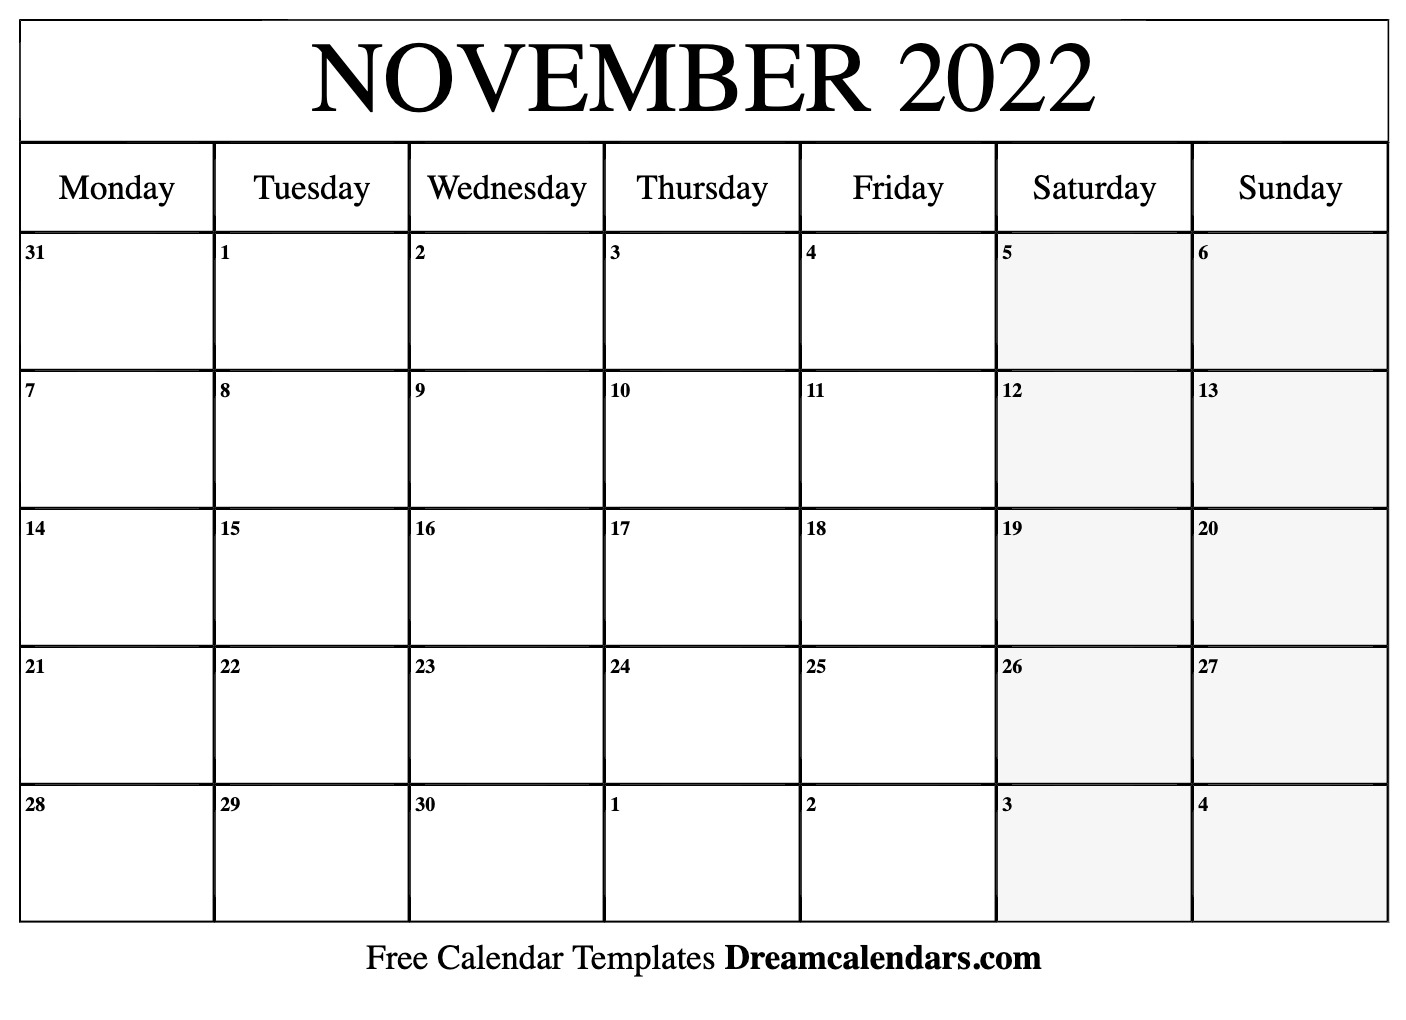 november-2022-calendar-free-blank-printable-with-holidays